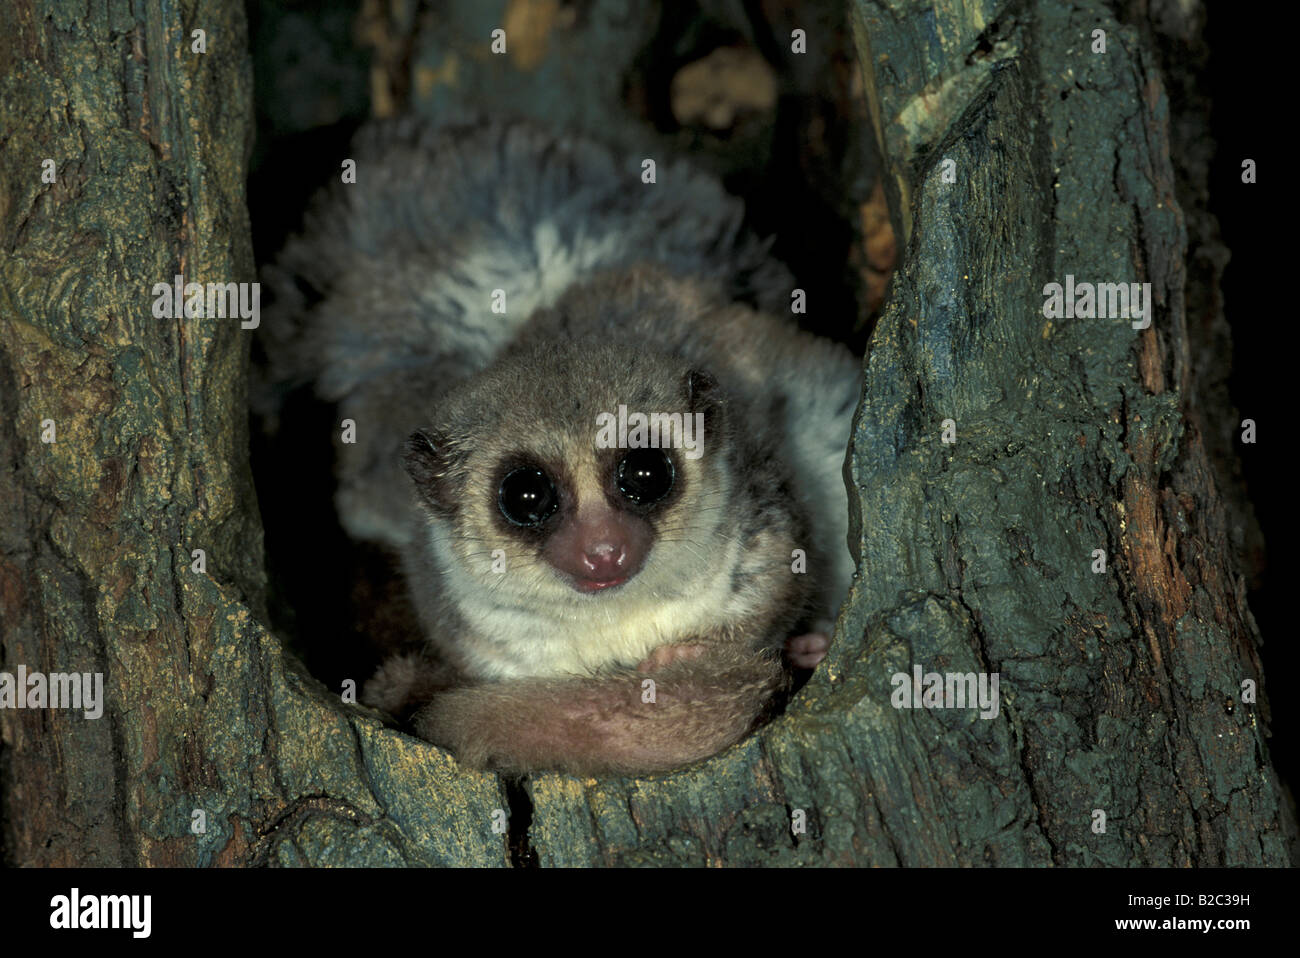 Fat-tailed or Lesser Dwarf Lemur (Cheirogaleus medius), adult, Madagascar, Africa Stock Photo